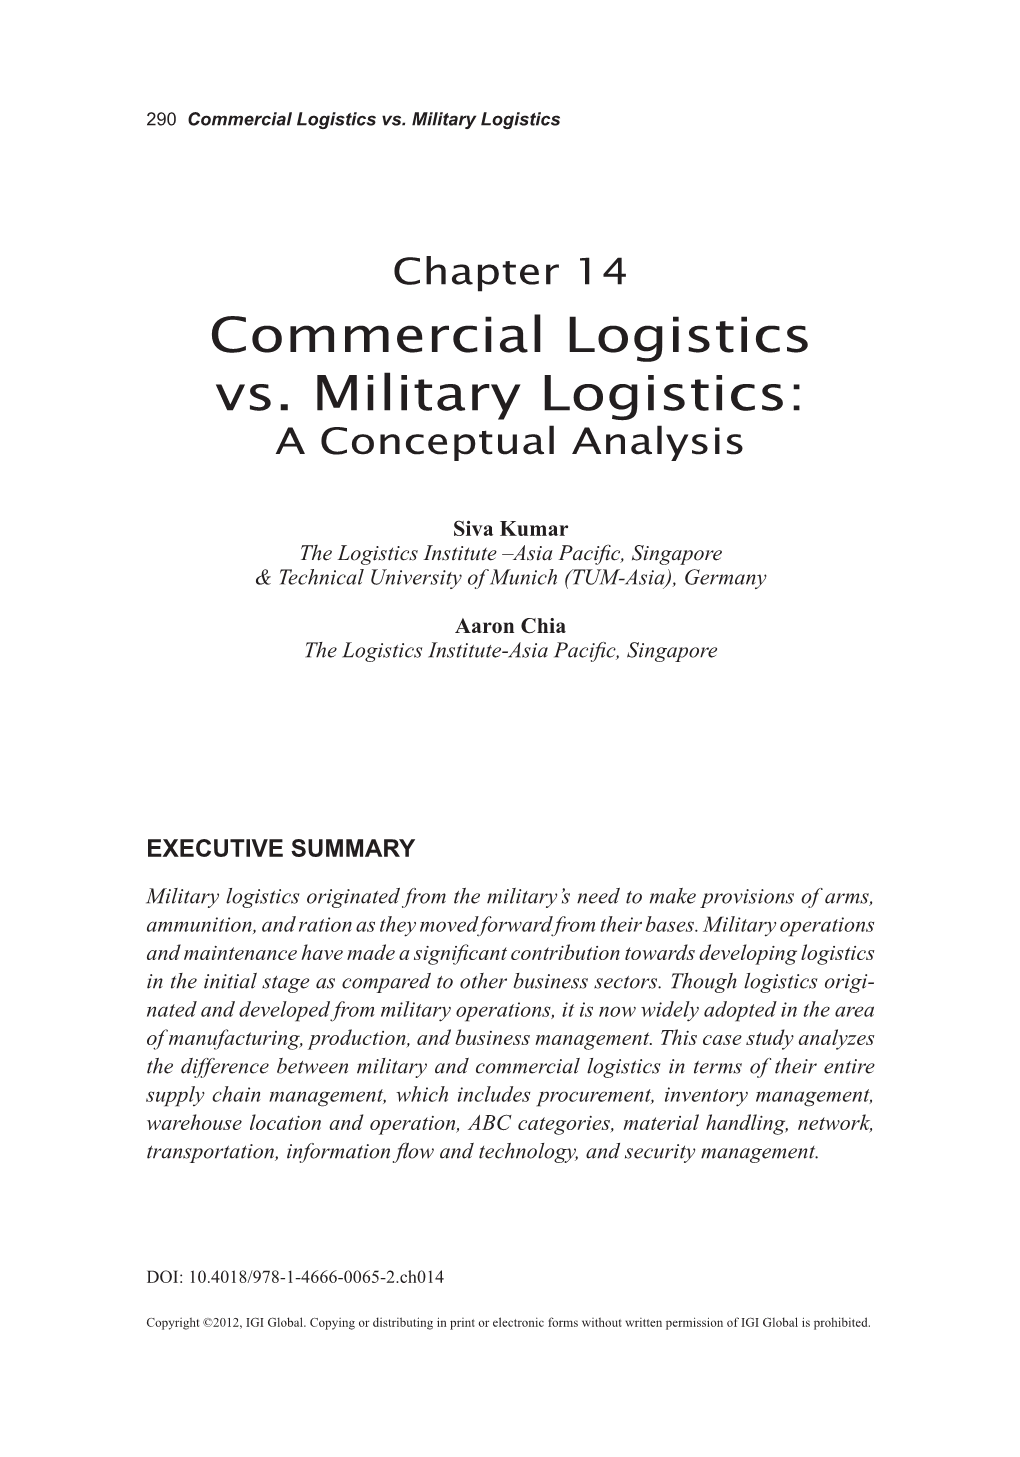 Commercial Logistics Vs. Military Logistics: a Conceptual Analysis